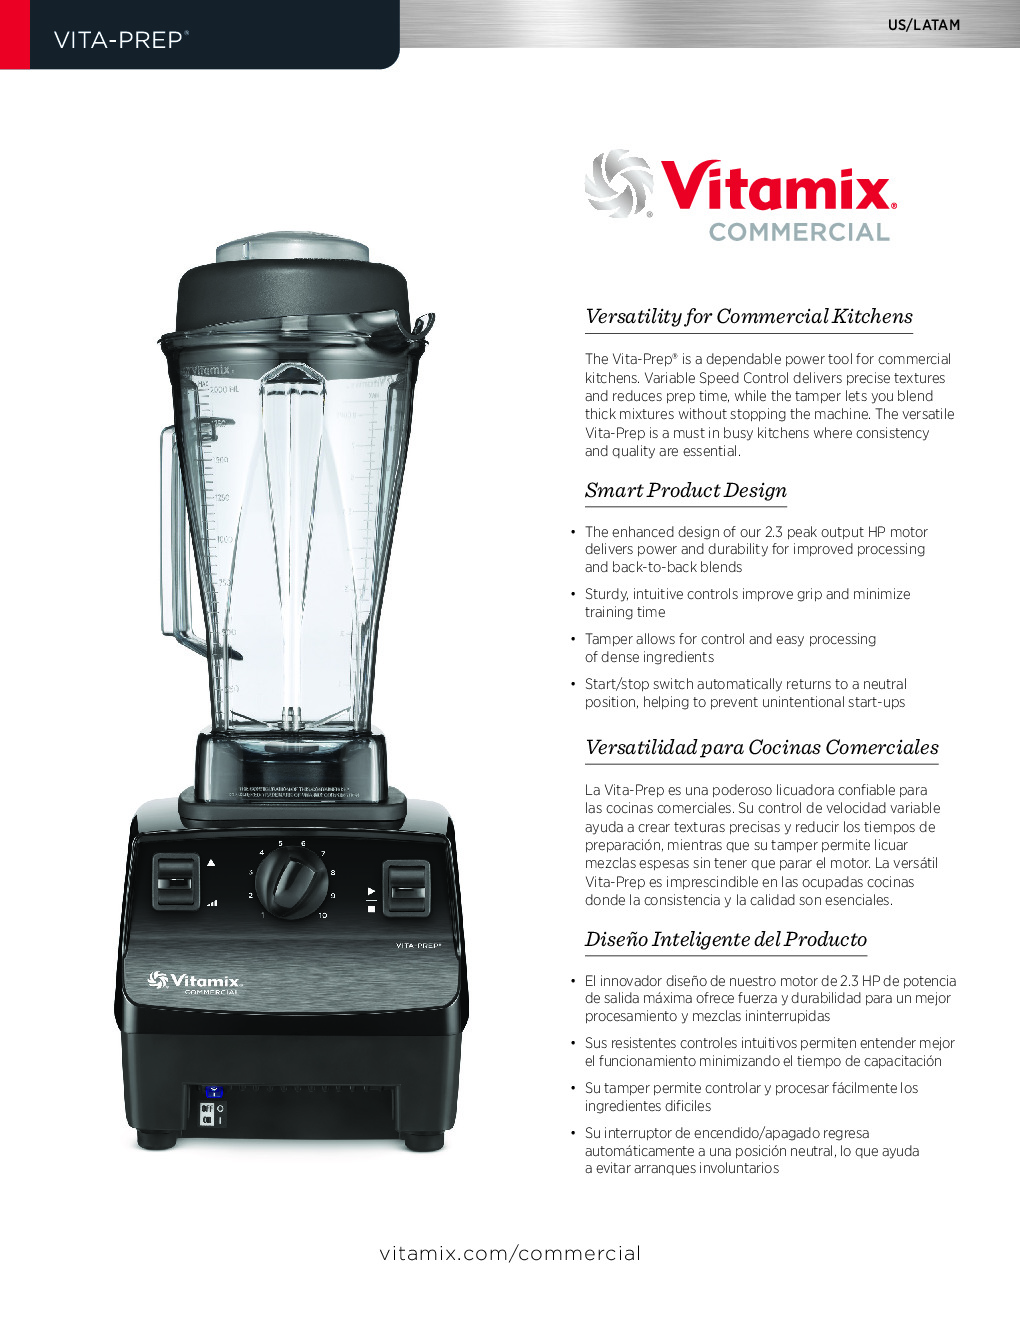 Vitamix 62827 Vita-Prep 2.3 hp Blender with 64 oz. Container